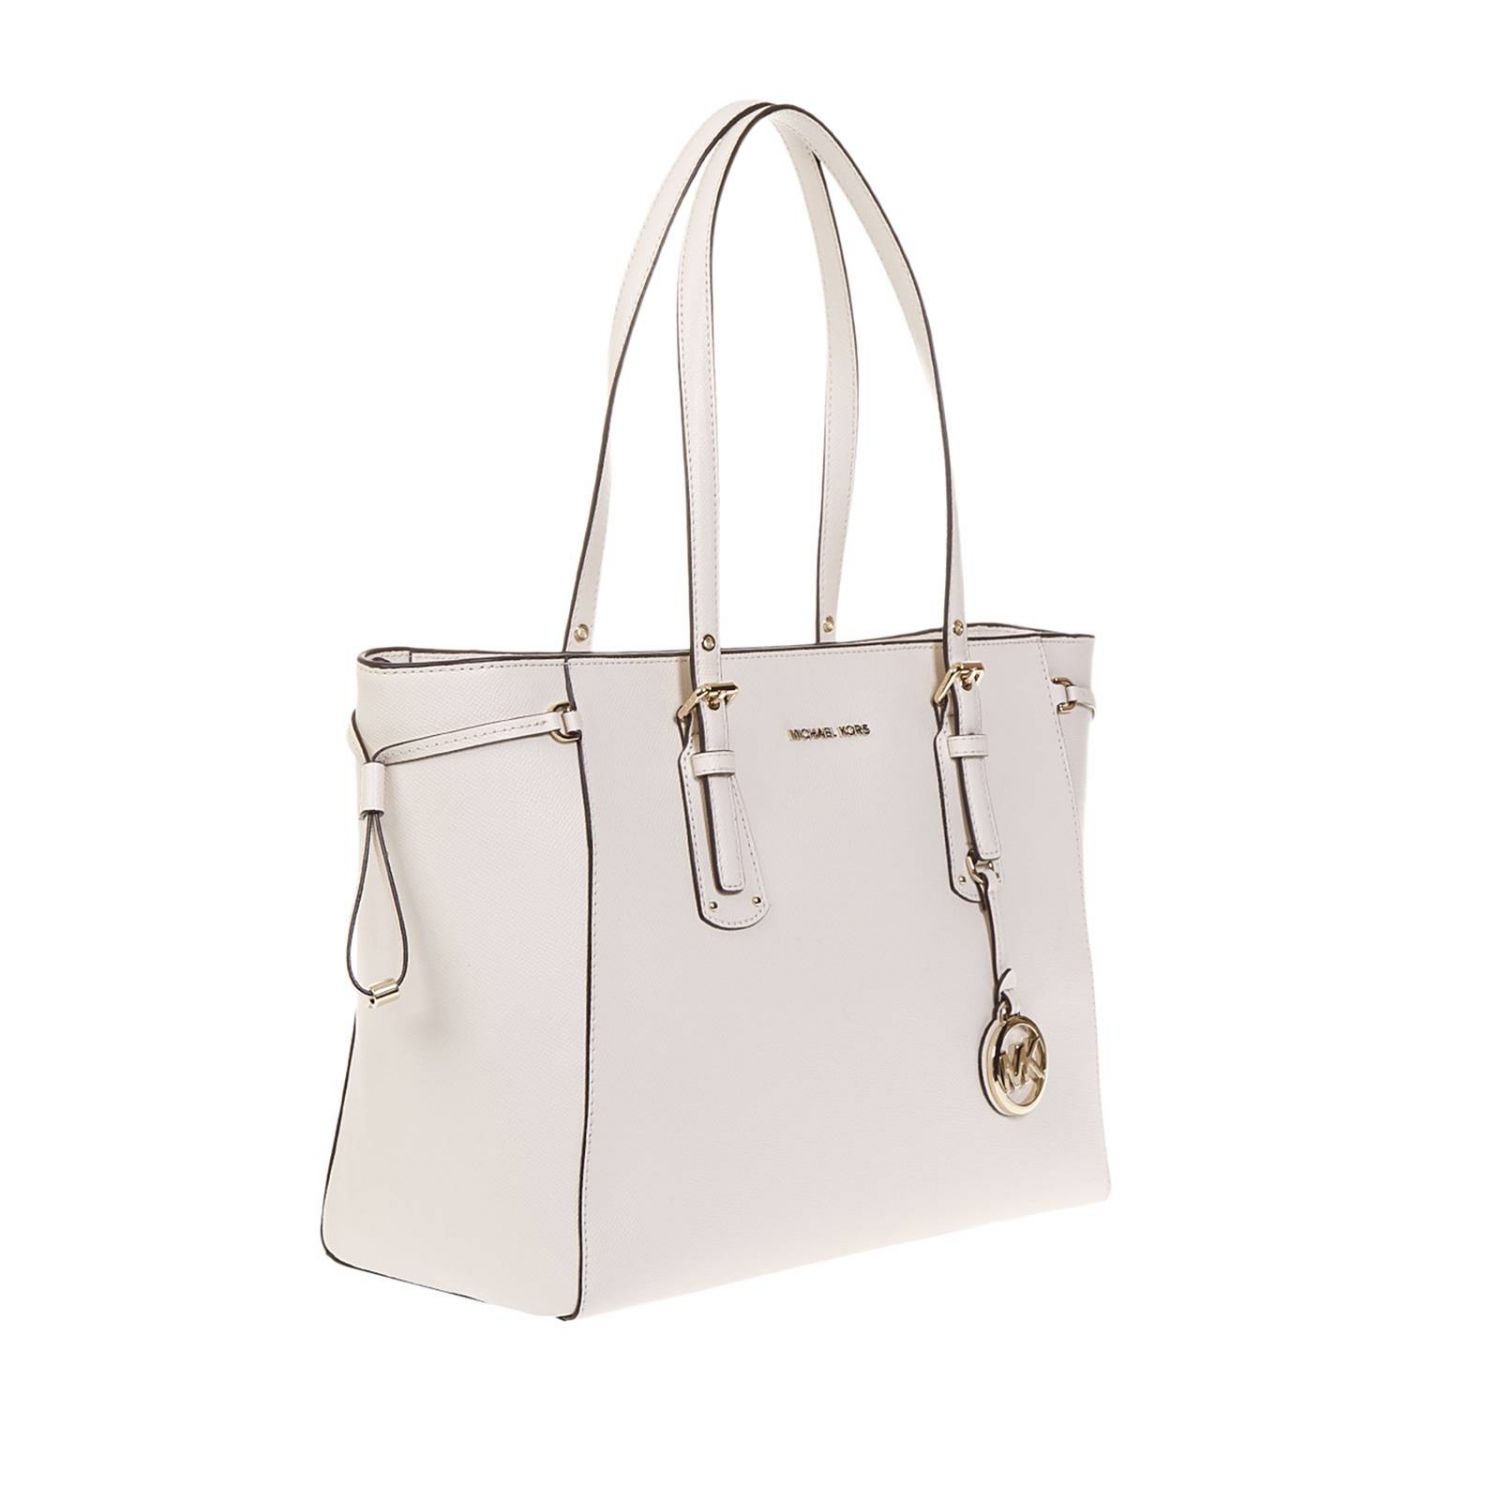 MICHAEL KORS: Handbag women Michael - Cream | Handbag Michael Kors ...